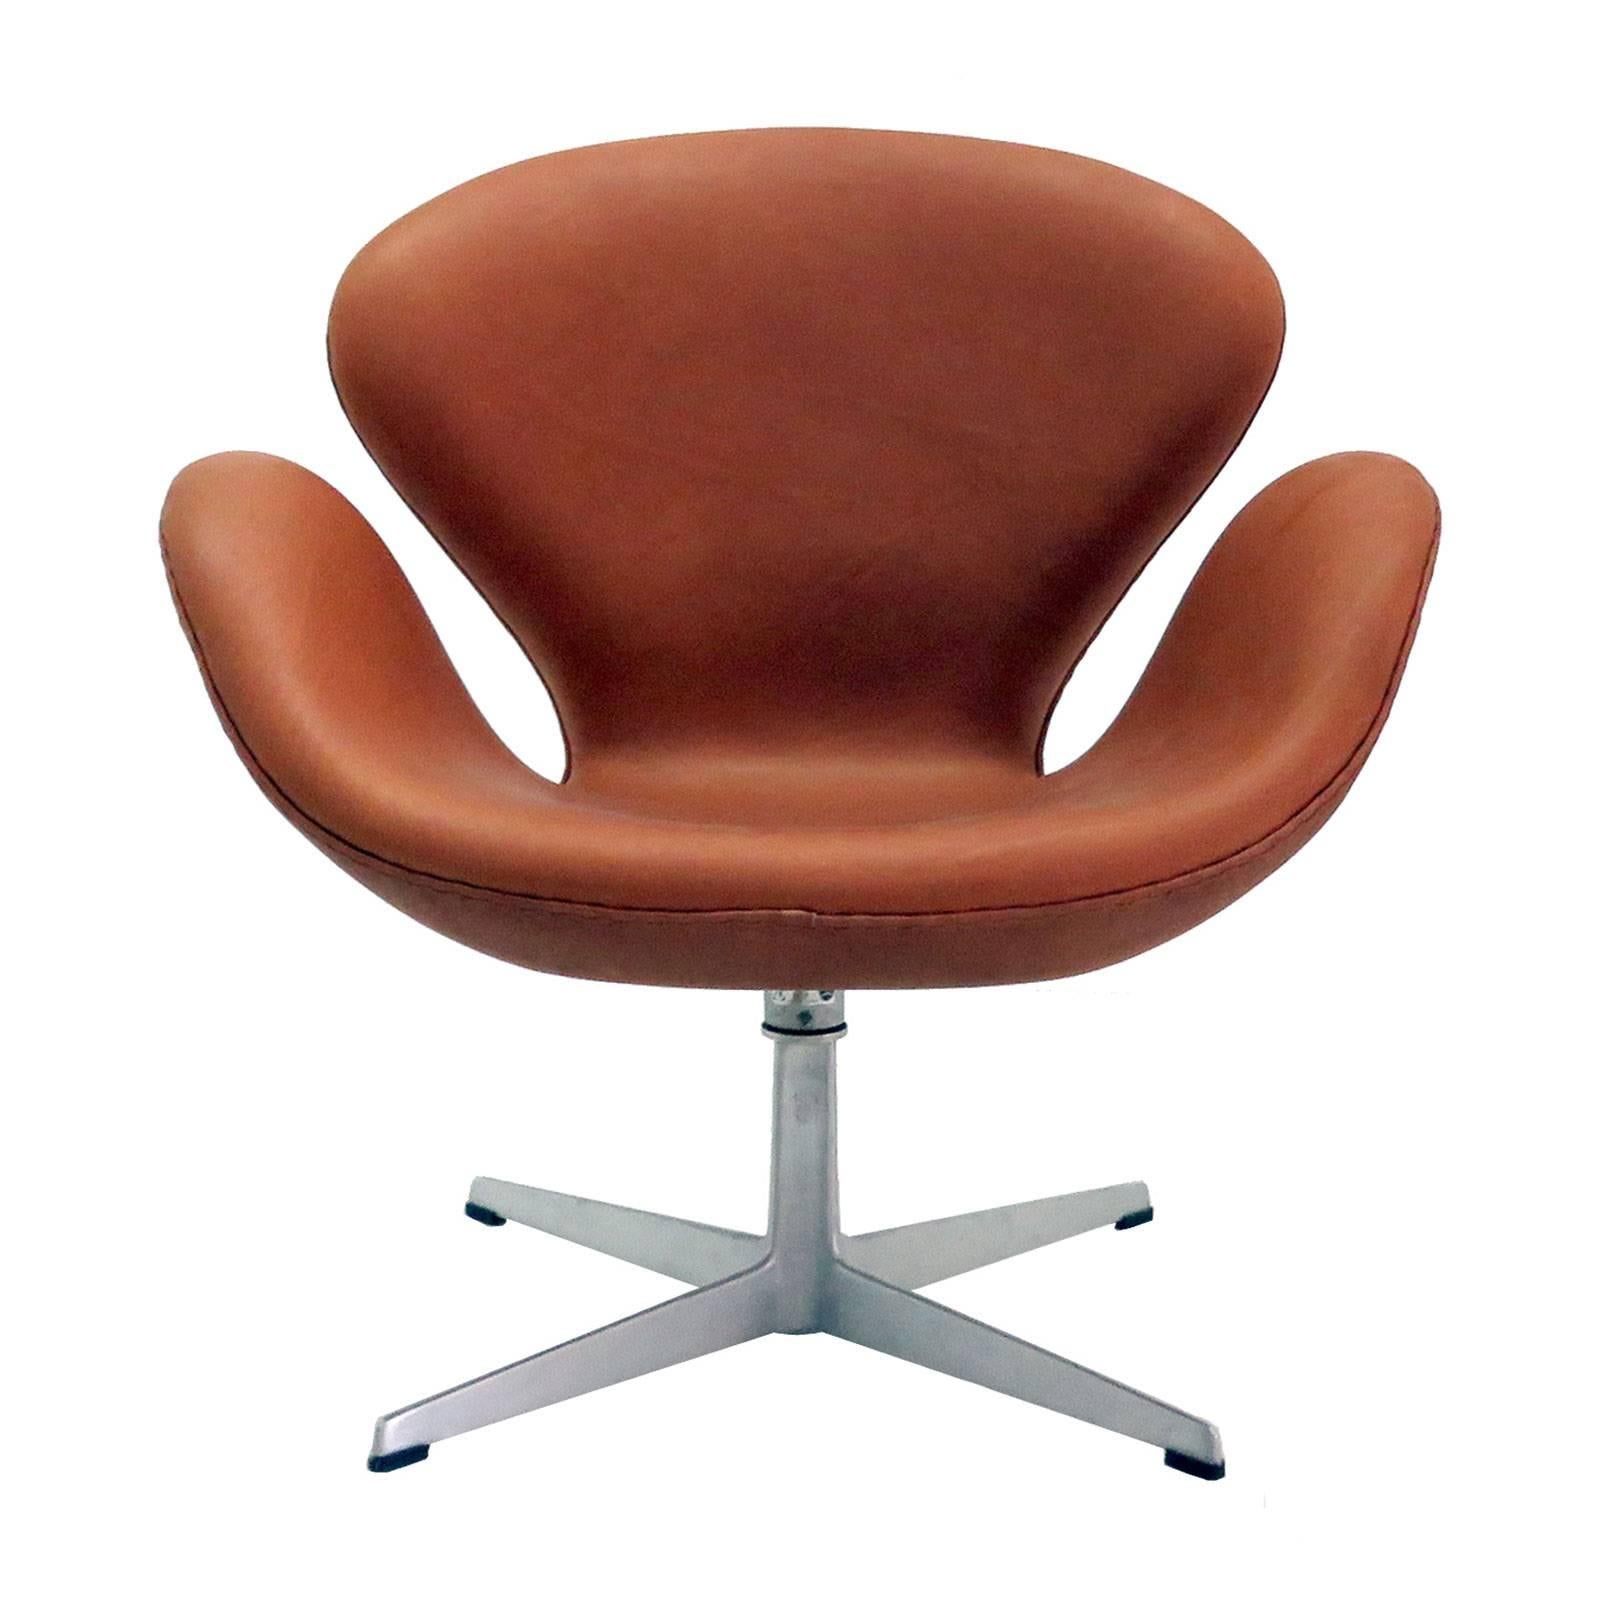 Arne Jacobsen, Swan Chair, Model 3320